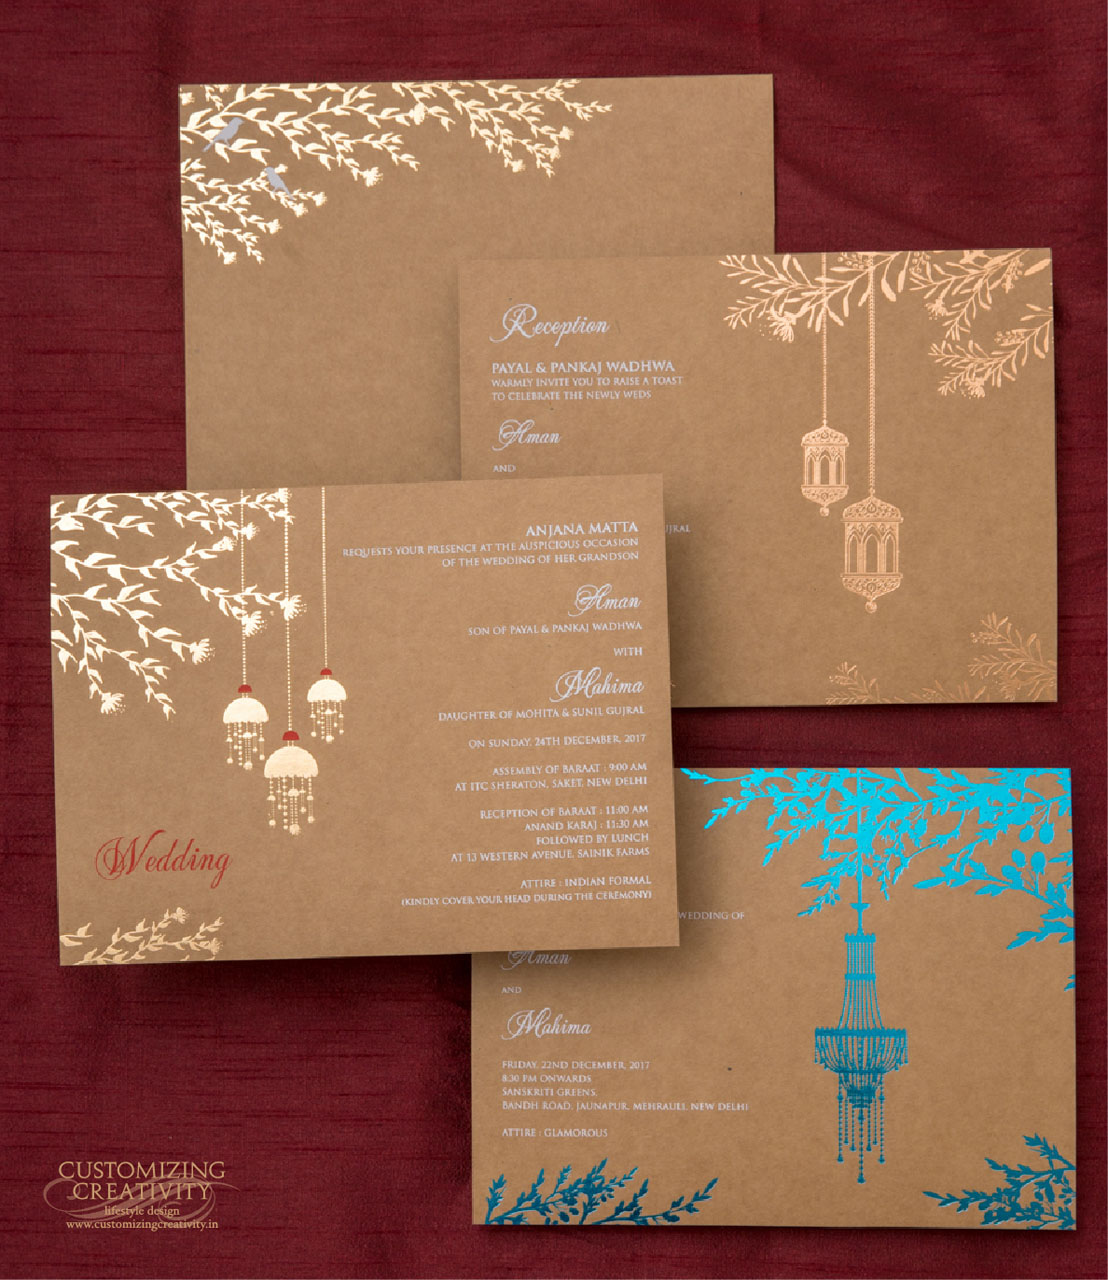 Customized wedding invitation cards